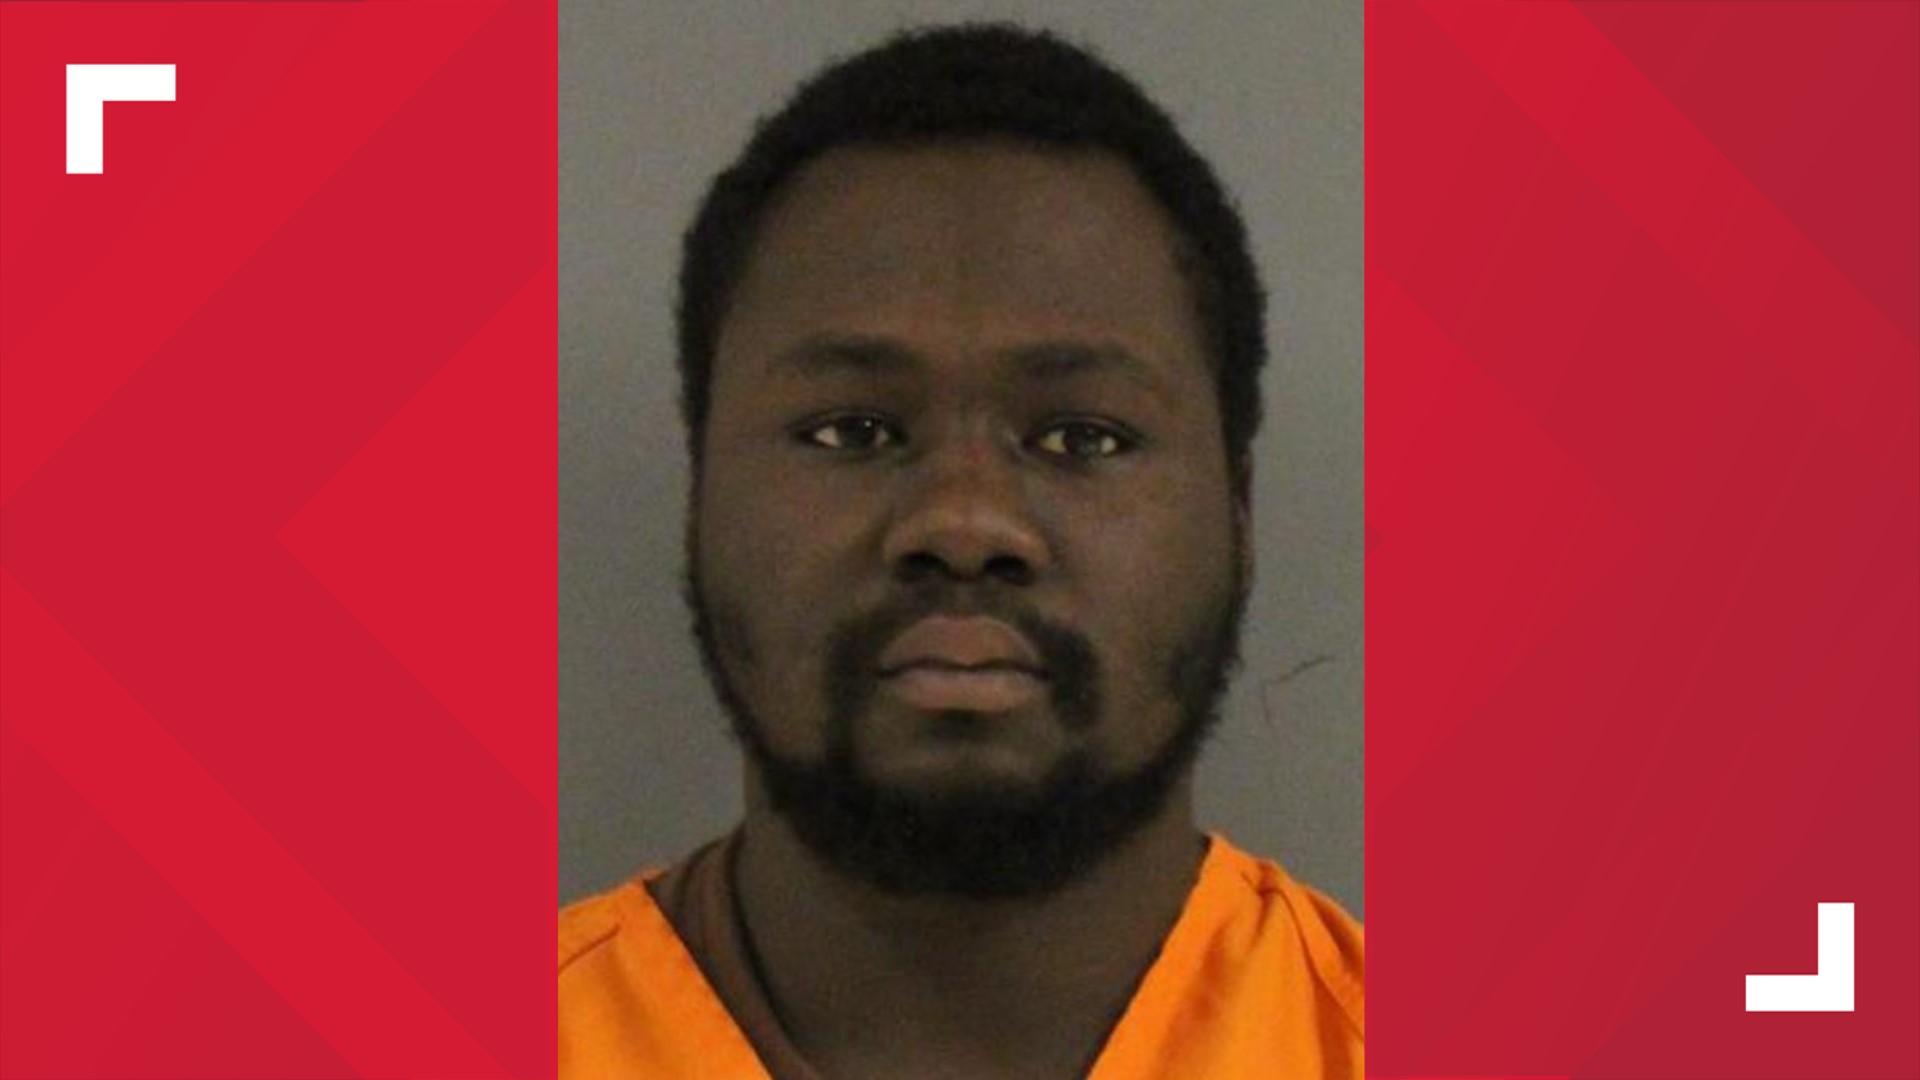 Kaliaf Ivory was taken into custody without incident in Sharon Pennsylvania on Monday.